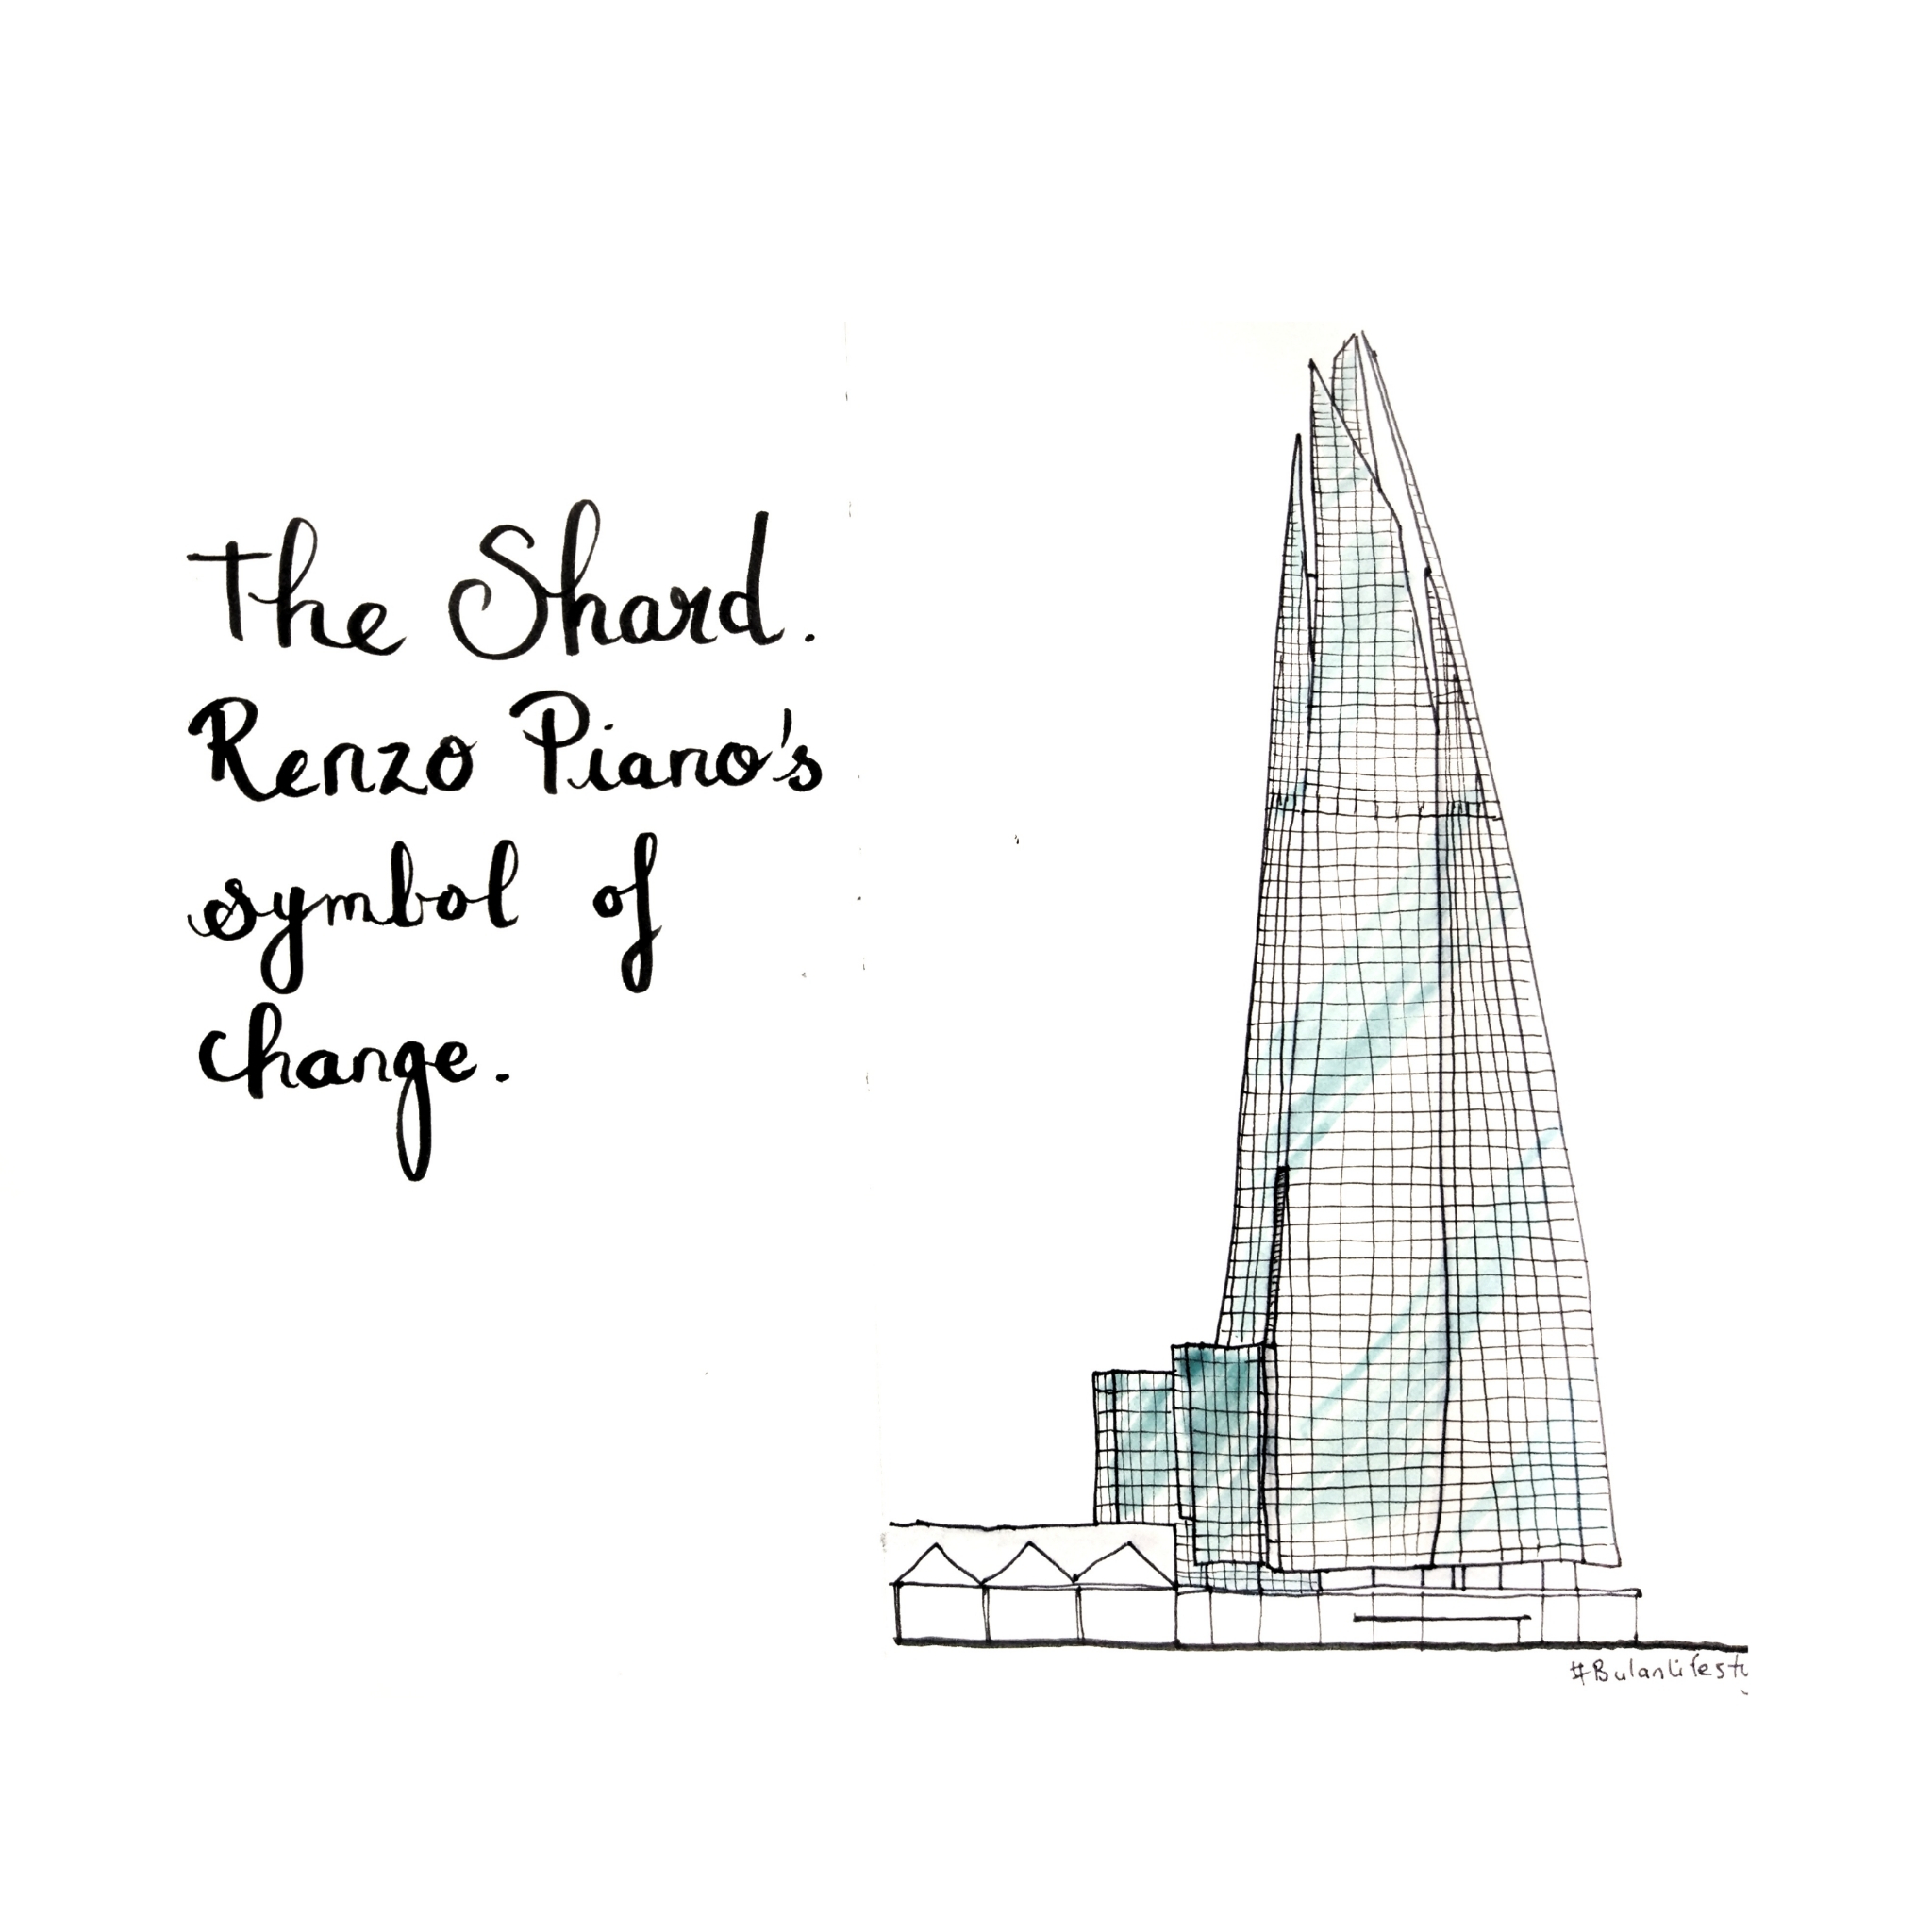 The Shard by Renzo Piano. Symbol of change